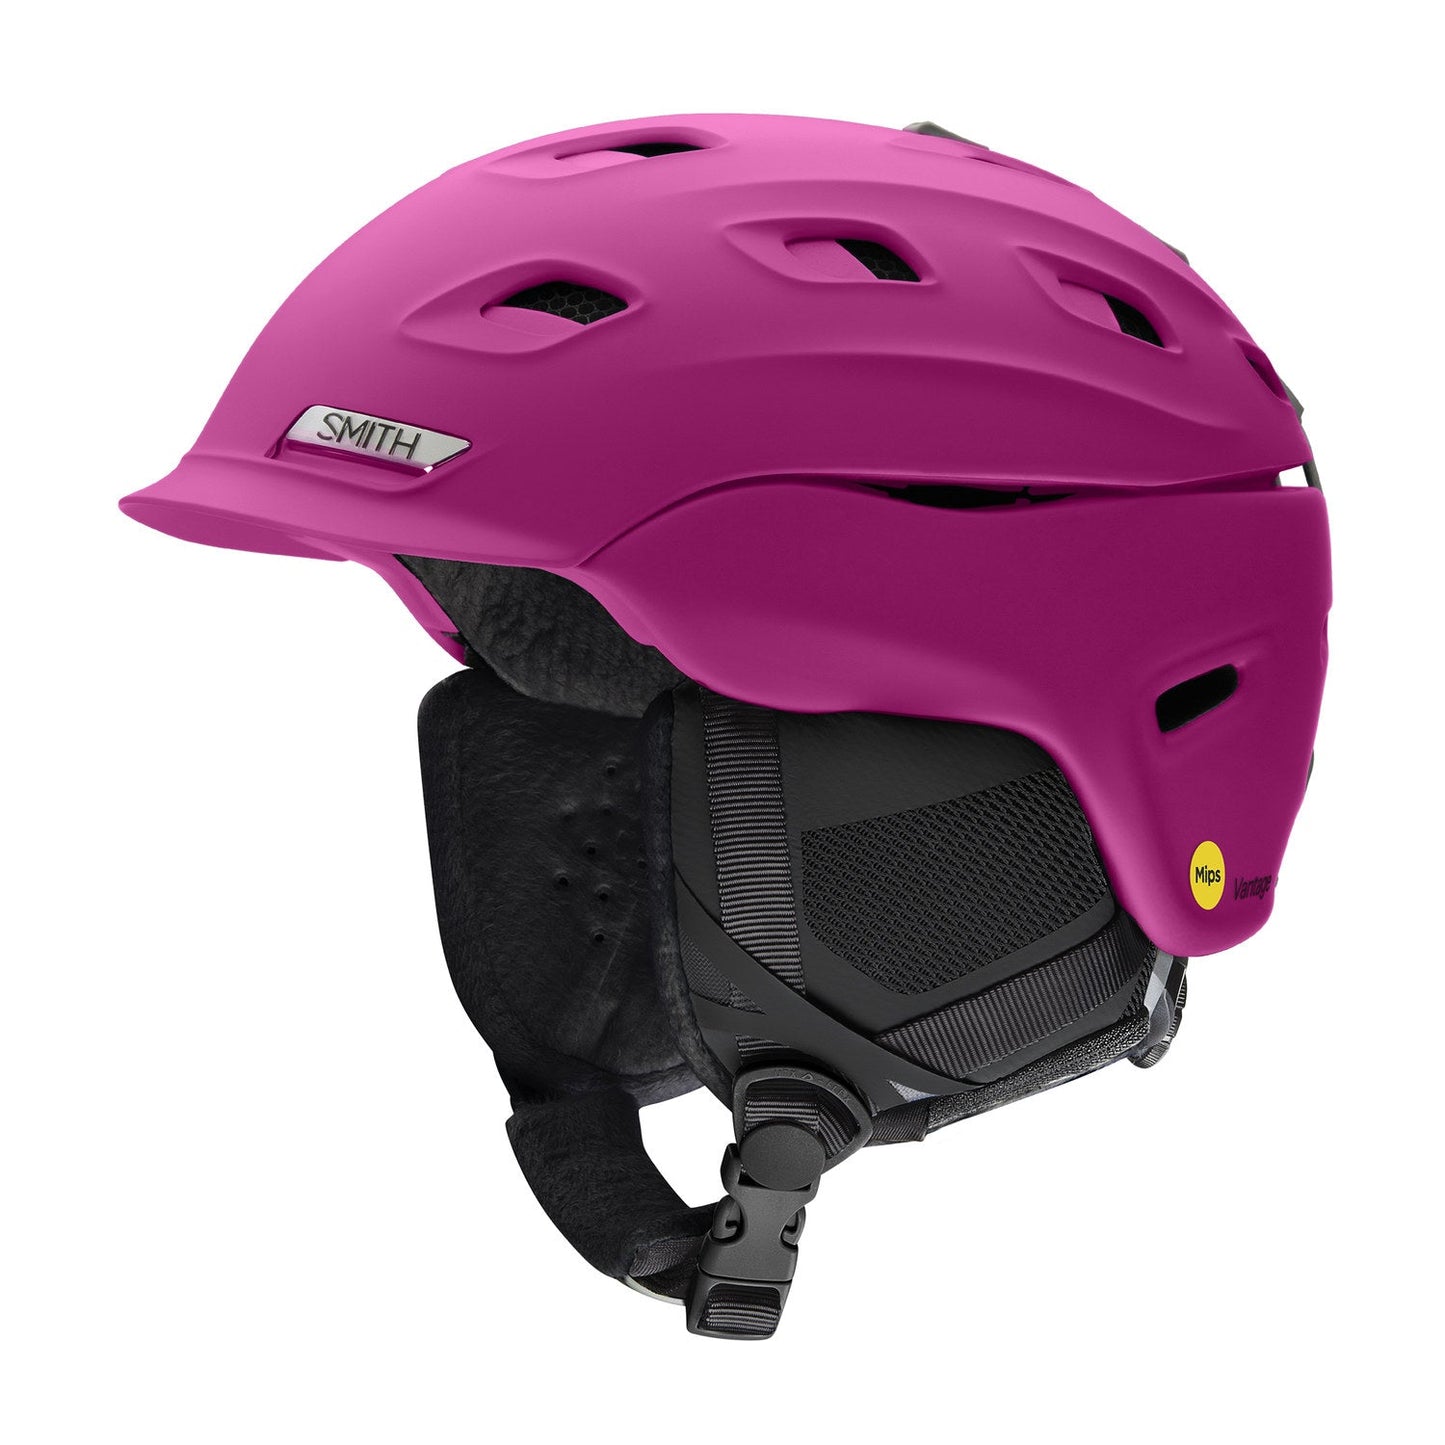 Smith Women's Vantage MIPS Snow Helmet - OpenBox Default Title - Smith Snow Helmets